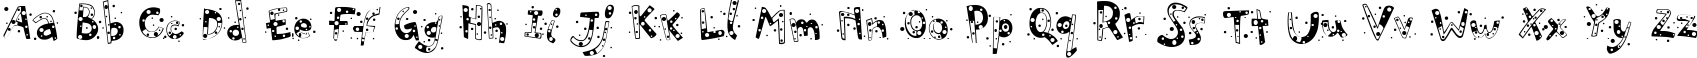 Пример написания английского алфавита шрифтом PF Playskool Pro Confetti